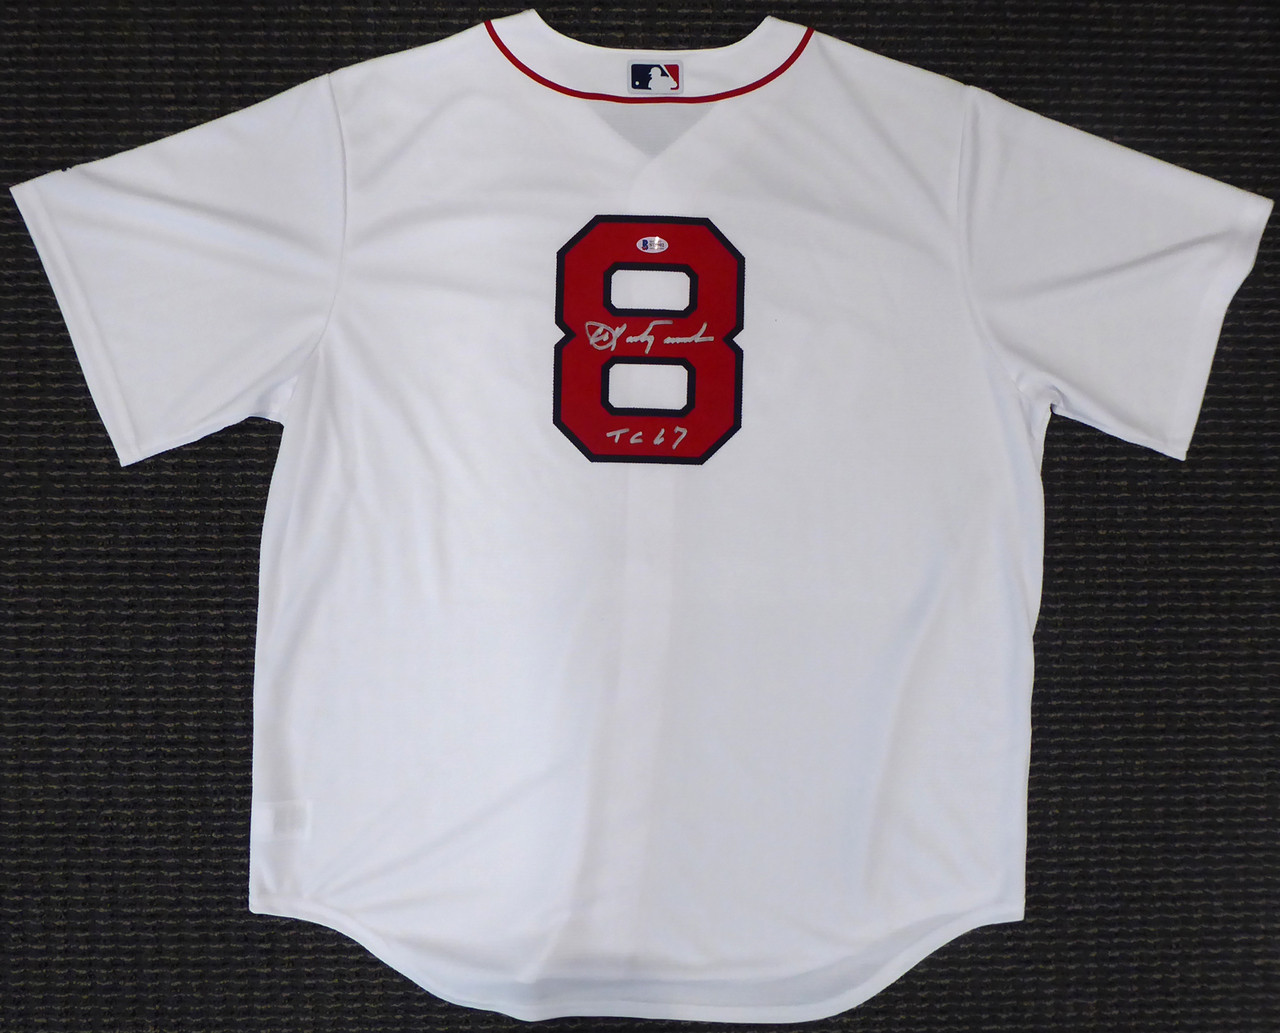 Carl Yastrzemski Boston Red Sox Jersey Number Kit, Authentic Home